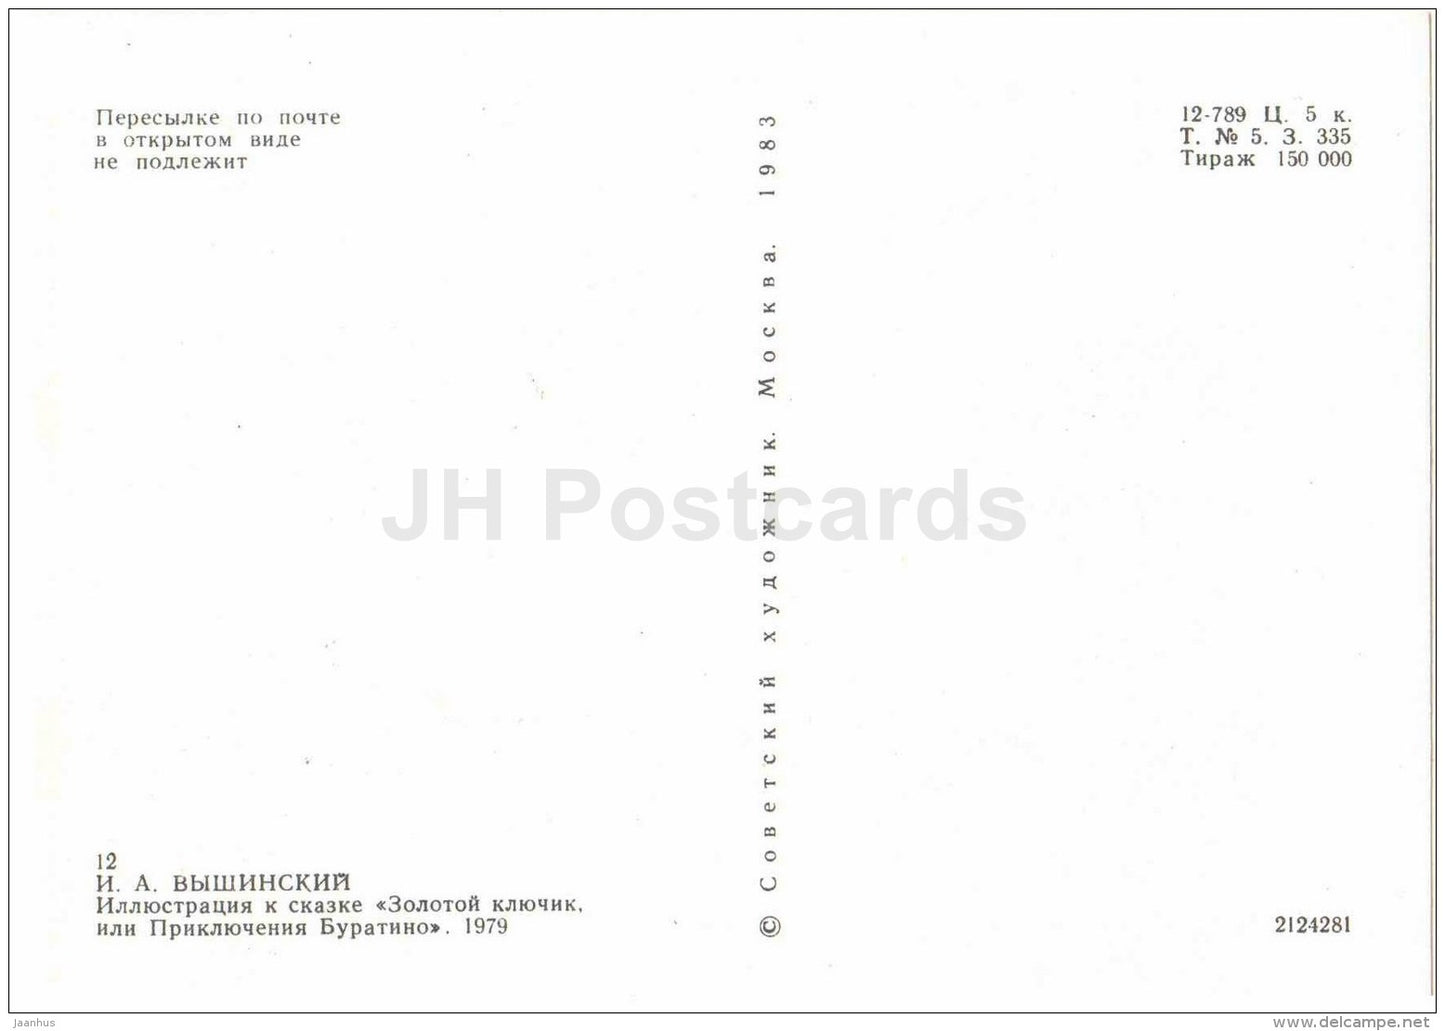 Karabas . Pierrot , Malvina - barrel organ - Golden Key - Pinocchio and Buratino - 1983 - Russia USSR - unused - JH Postcards